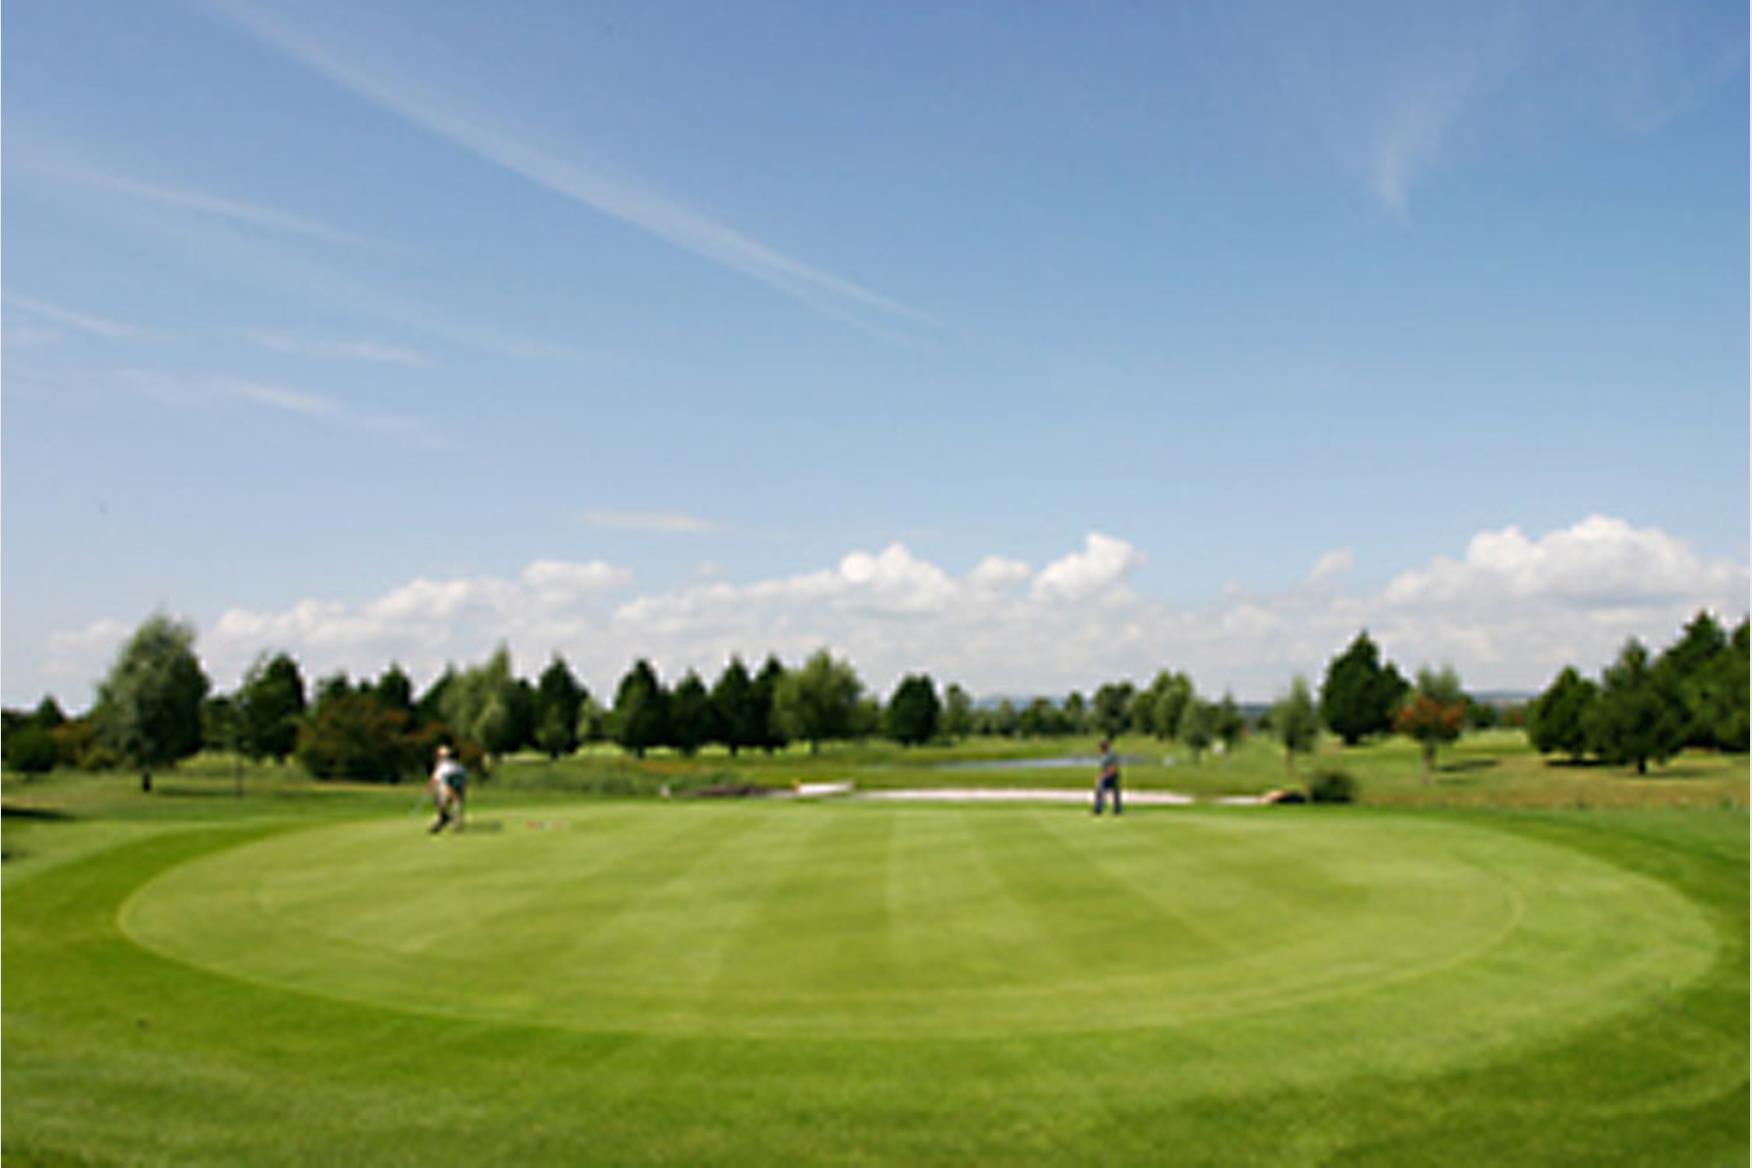 Peterstone lakes golf club